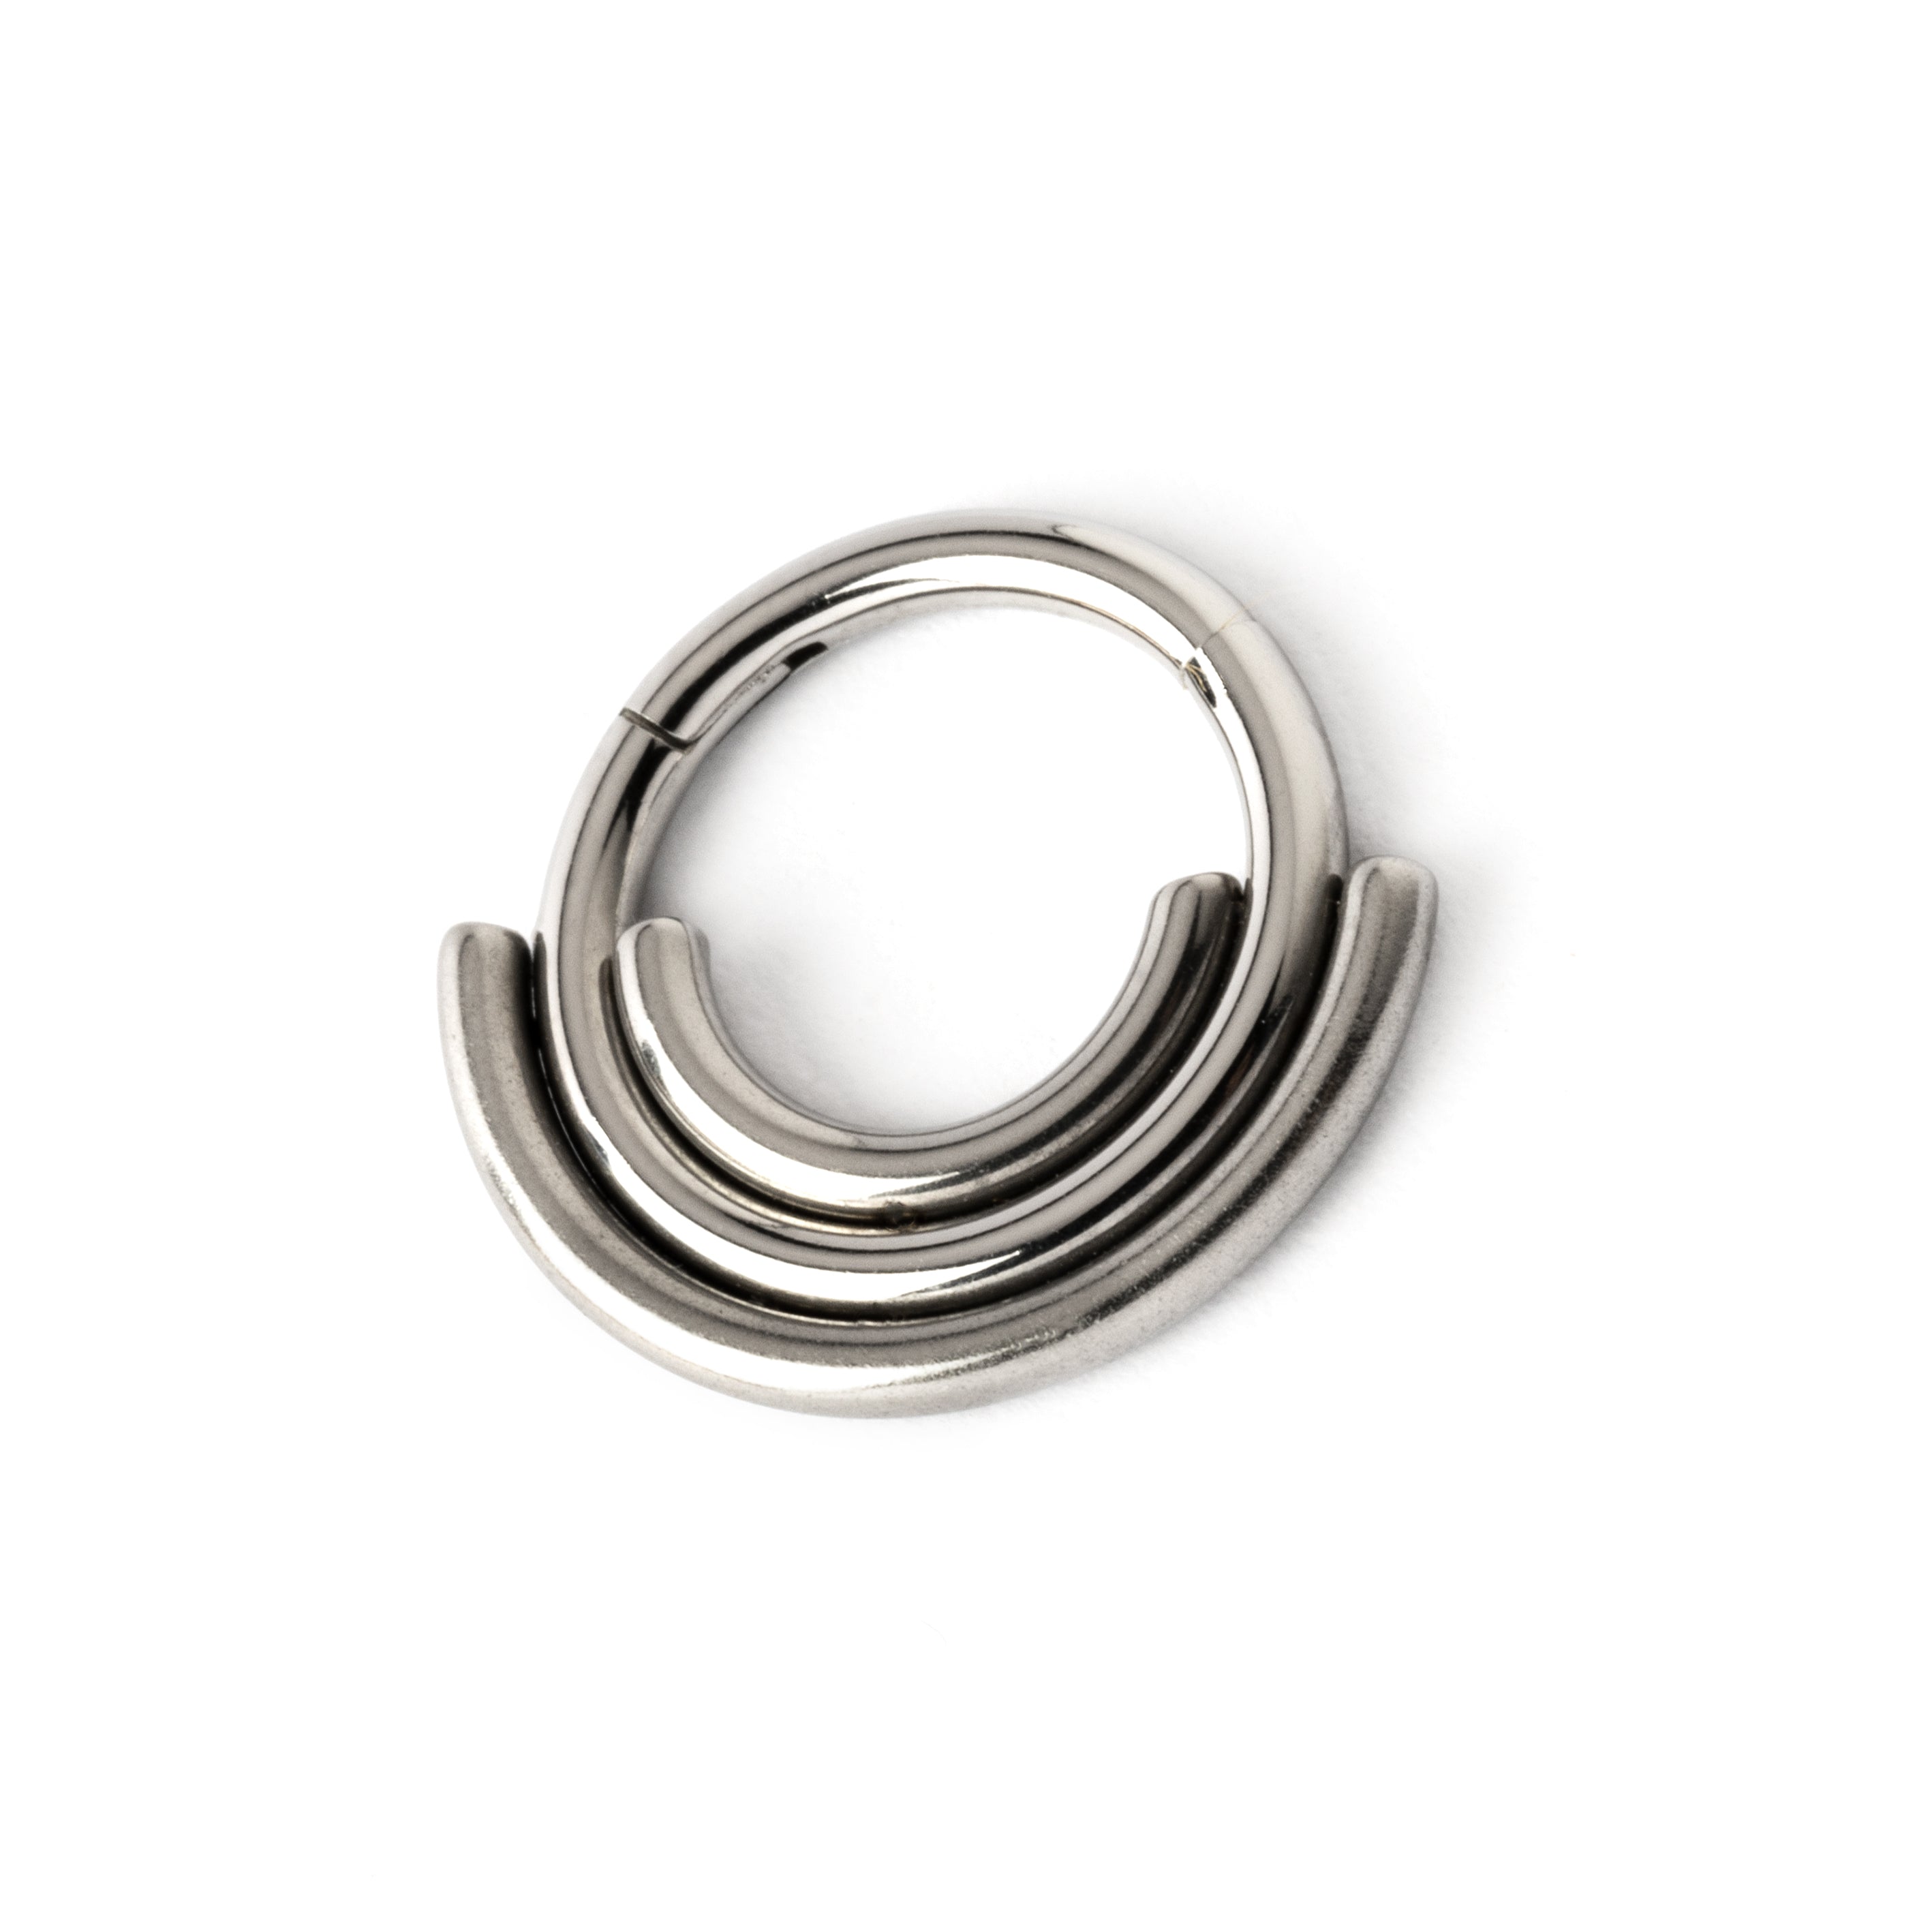 Akasha surgical steel multiple rings septum clicker left side view